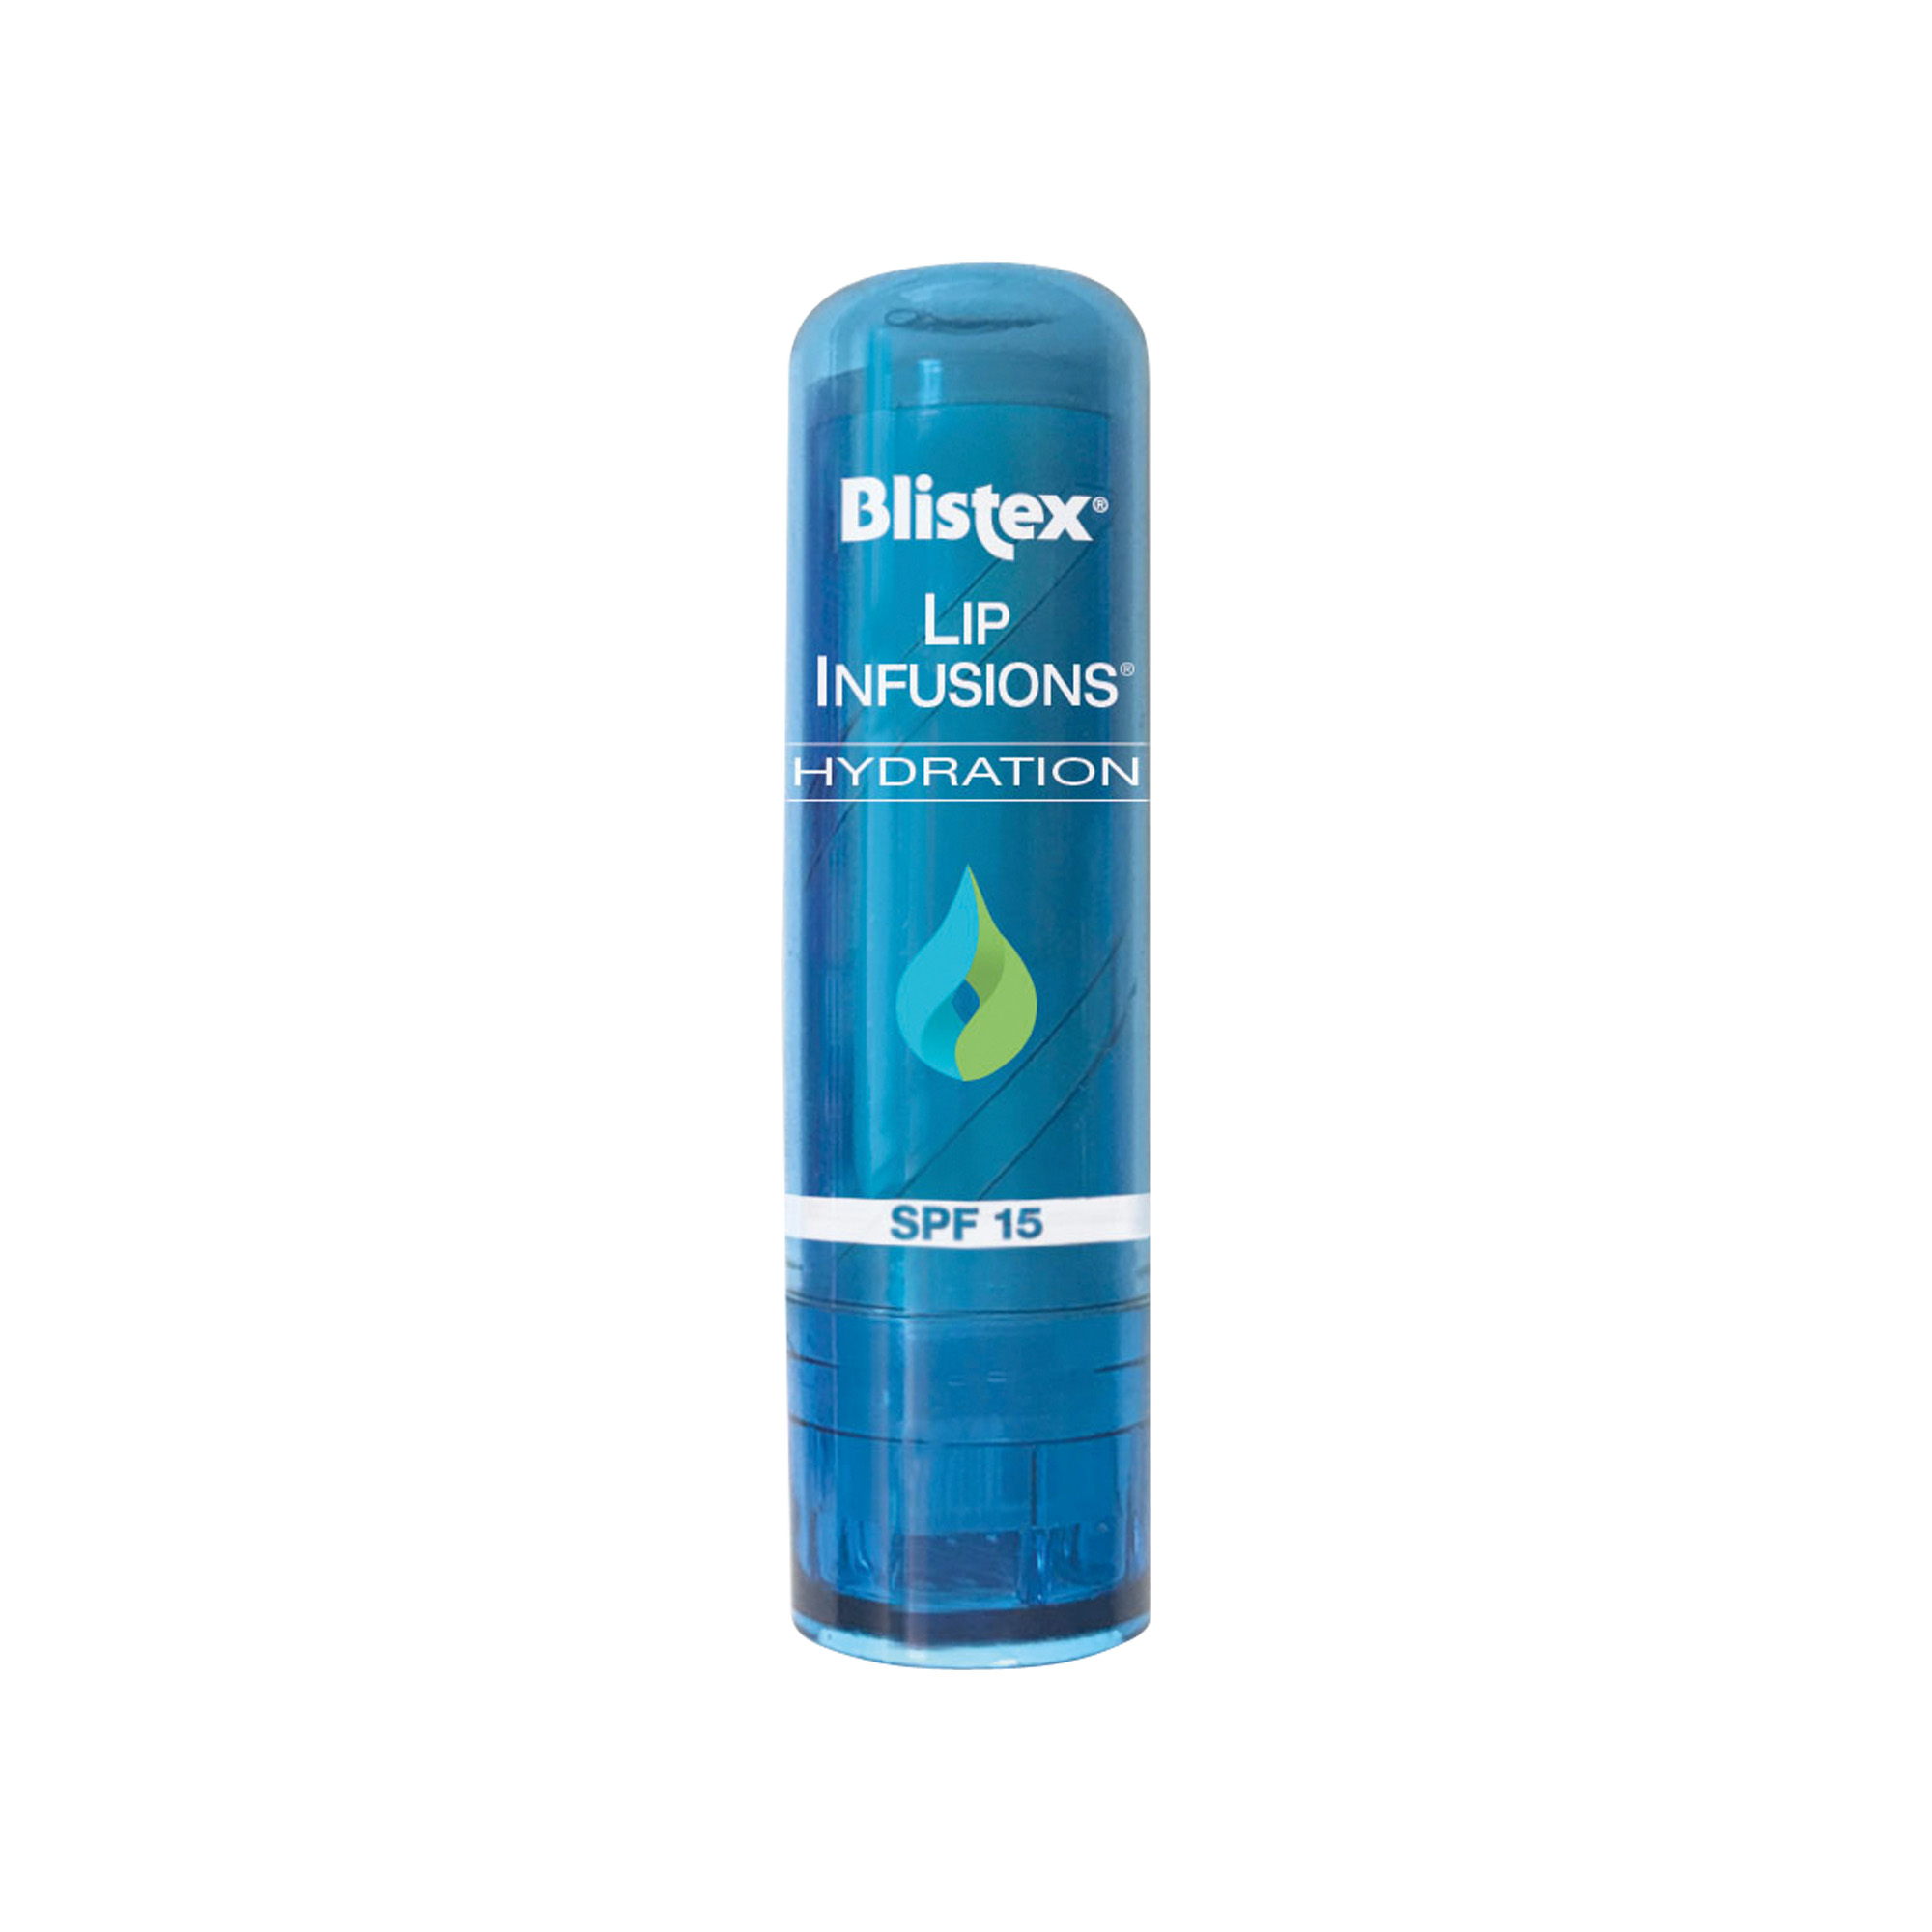 Blistex Lip Infusions Hydratation stick 24H moisturiser